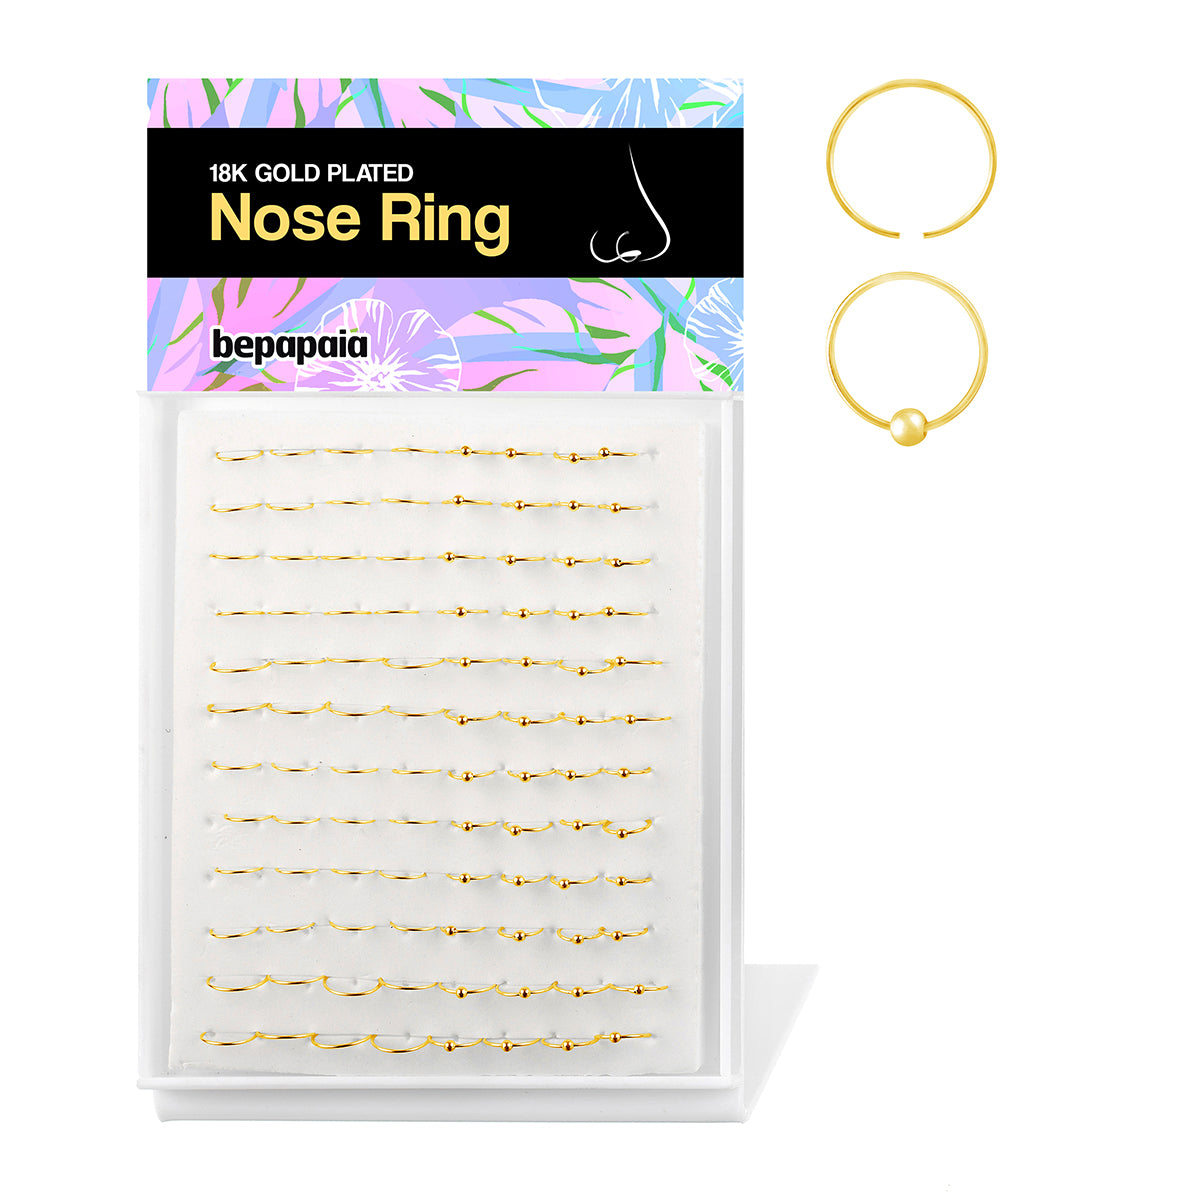 Gold nose ring